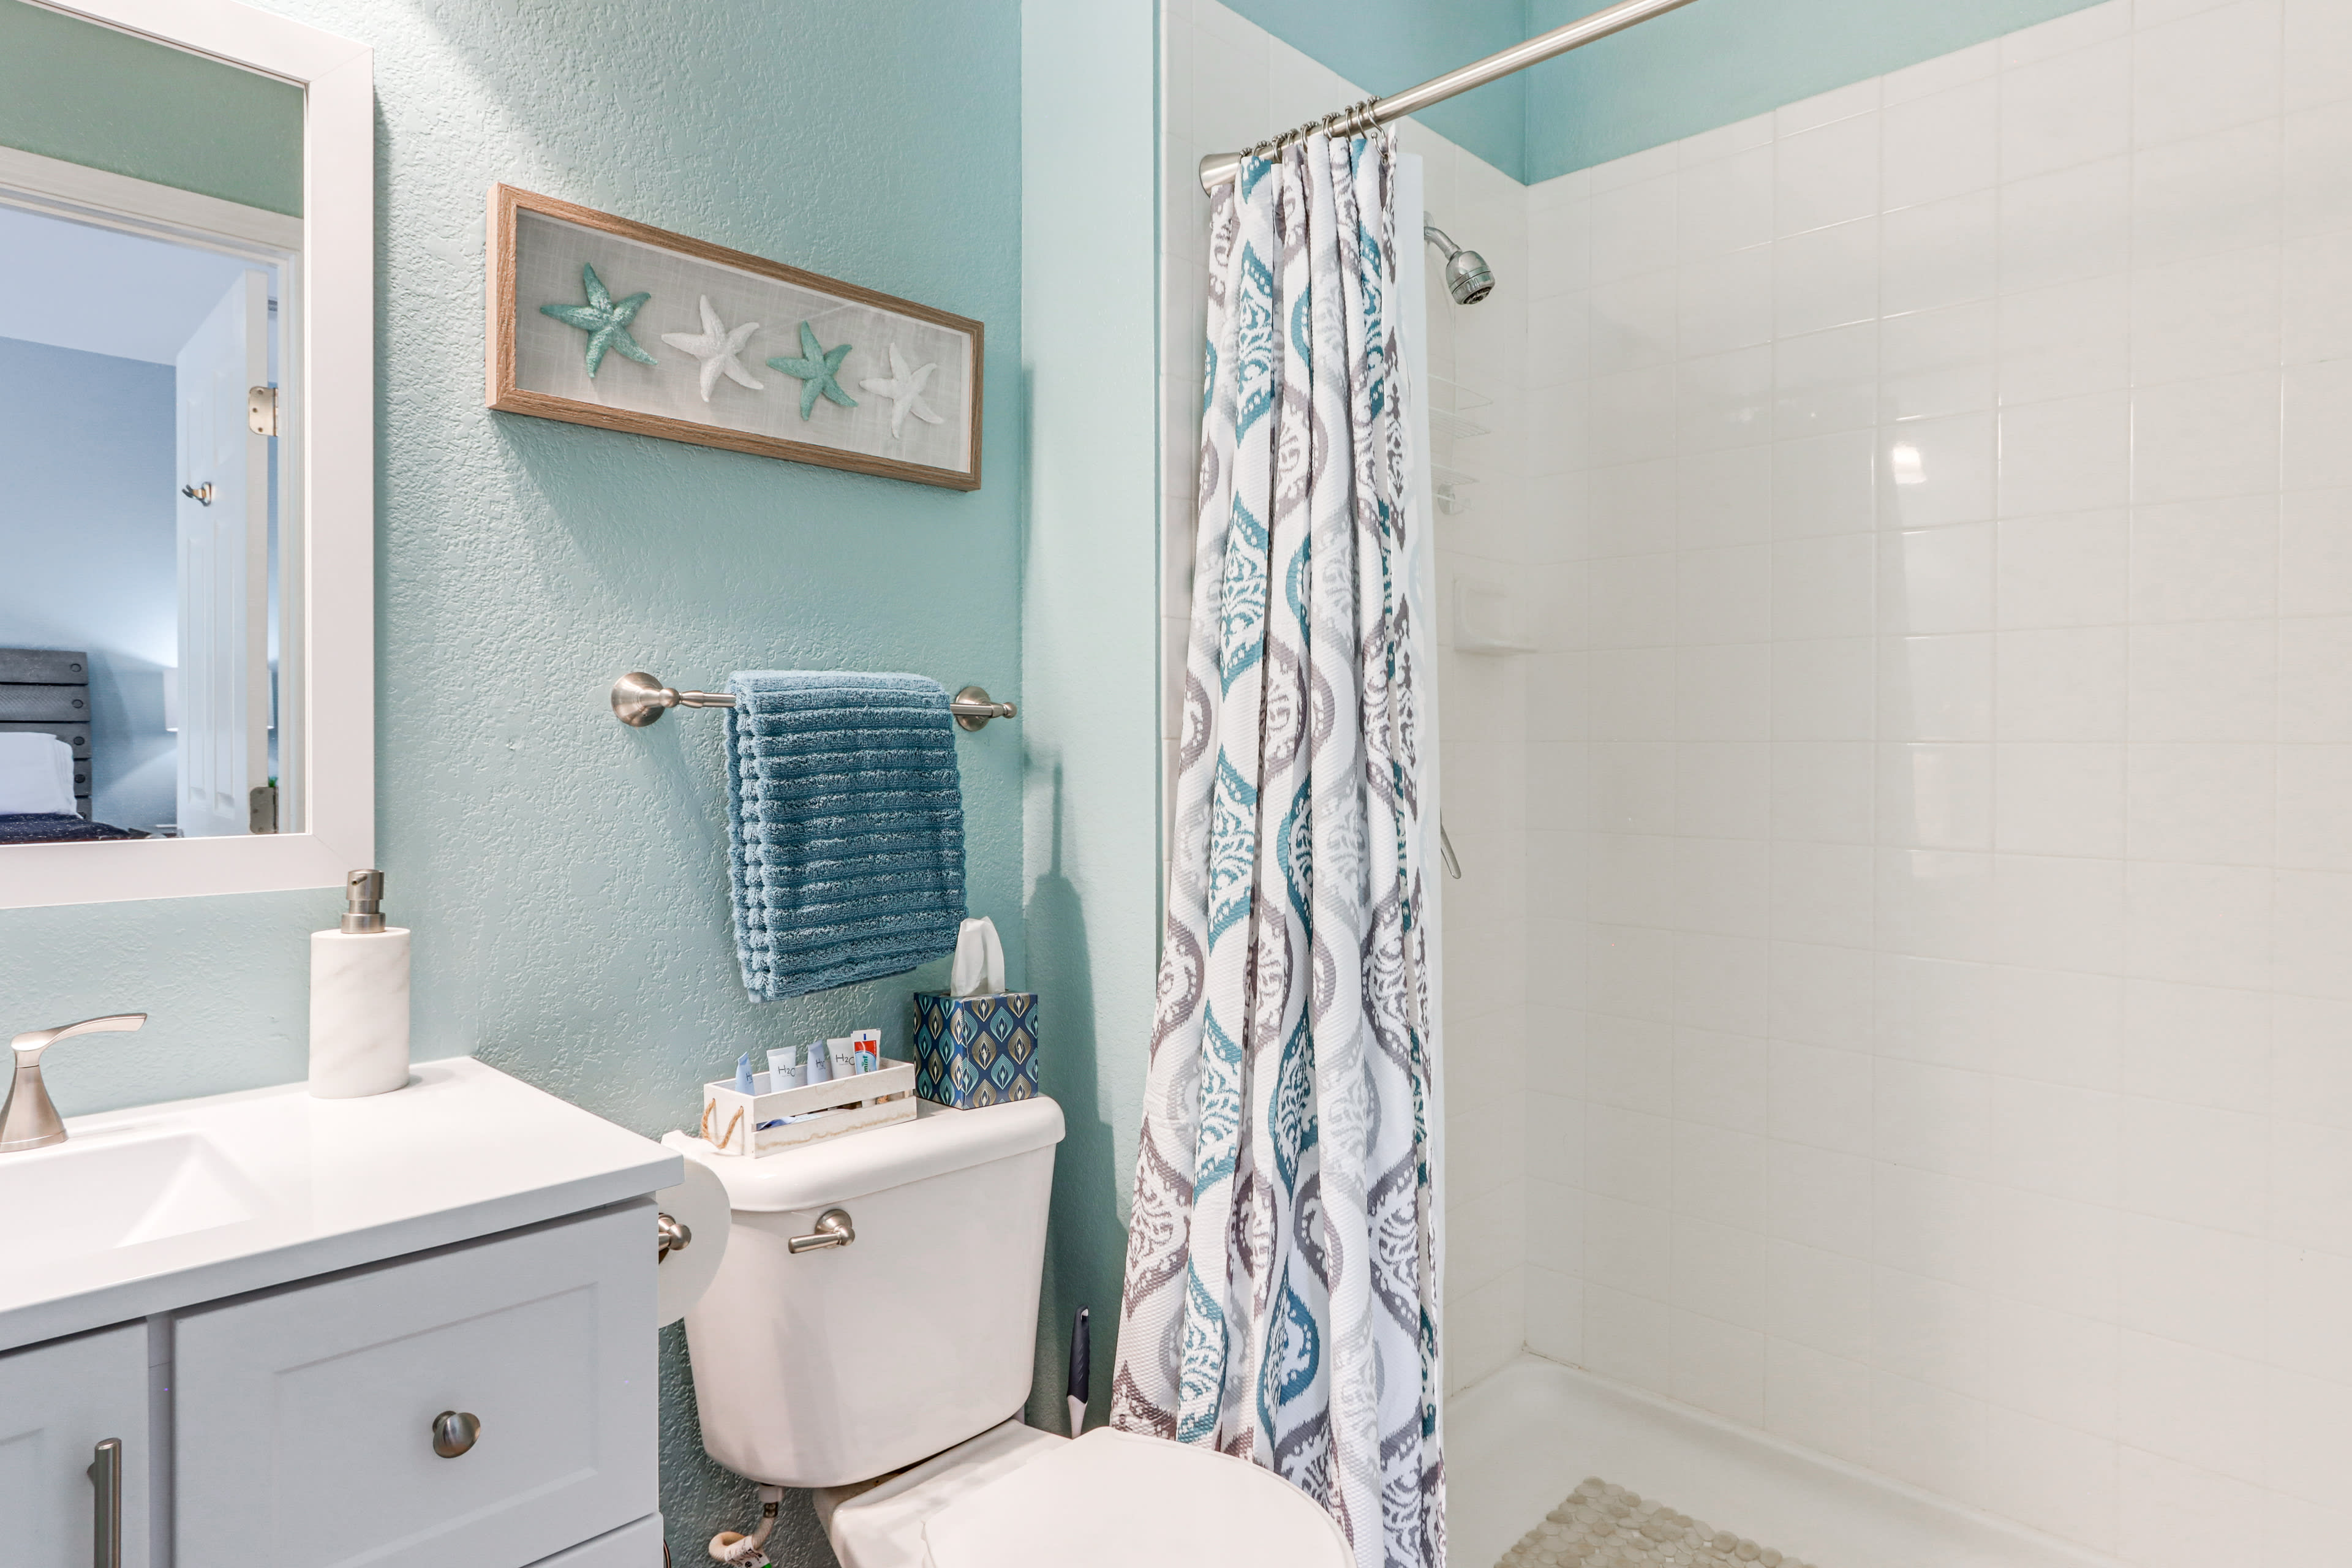 En-Suite Bathroom | Complimentary Toiletries | Towels Provided